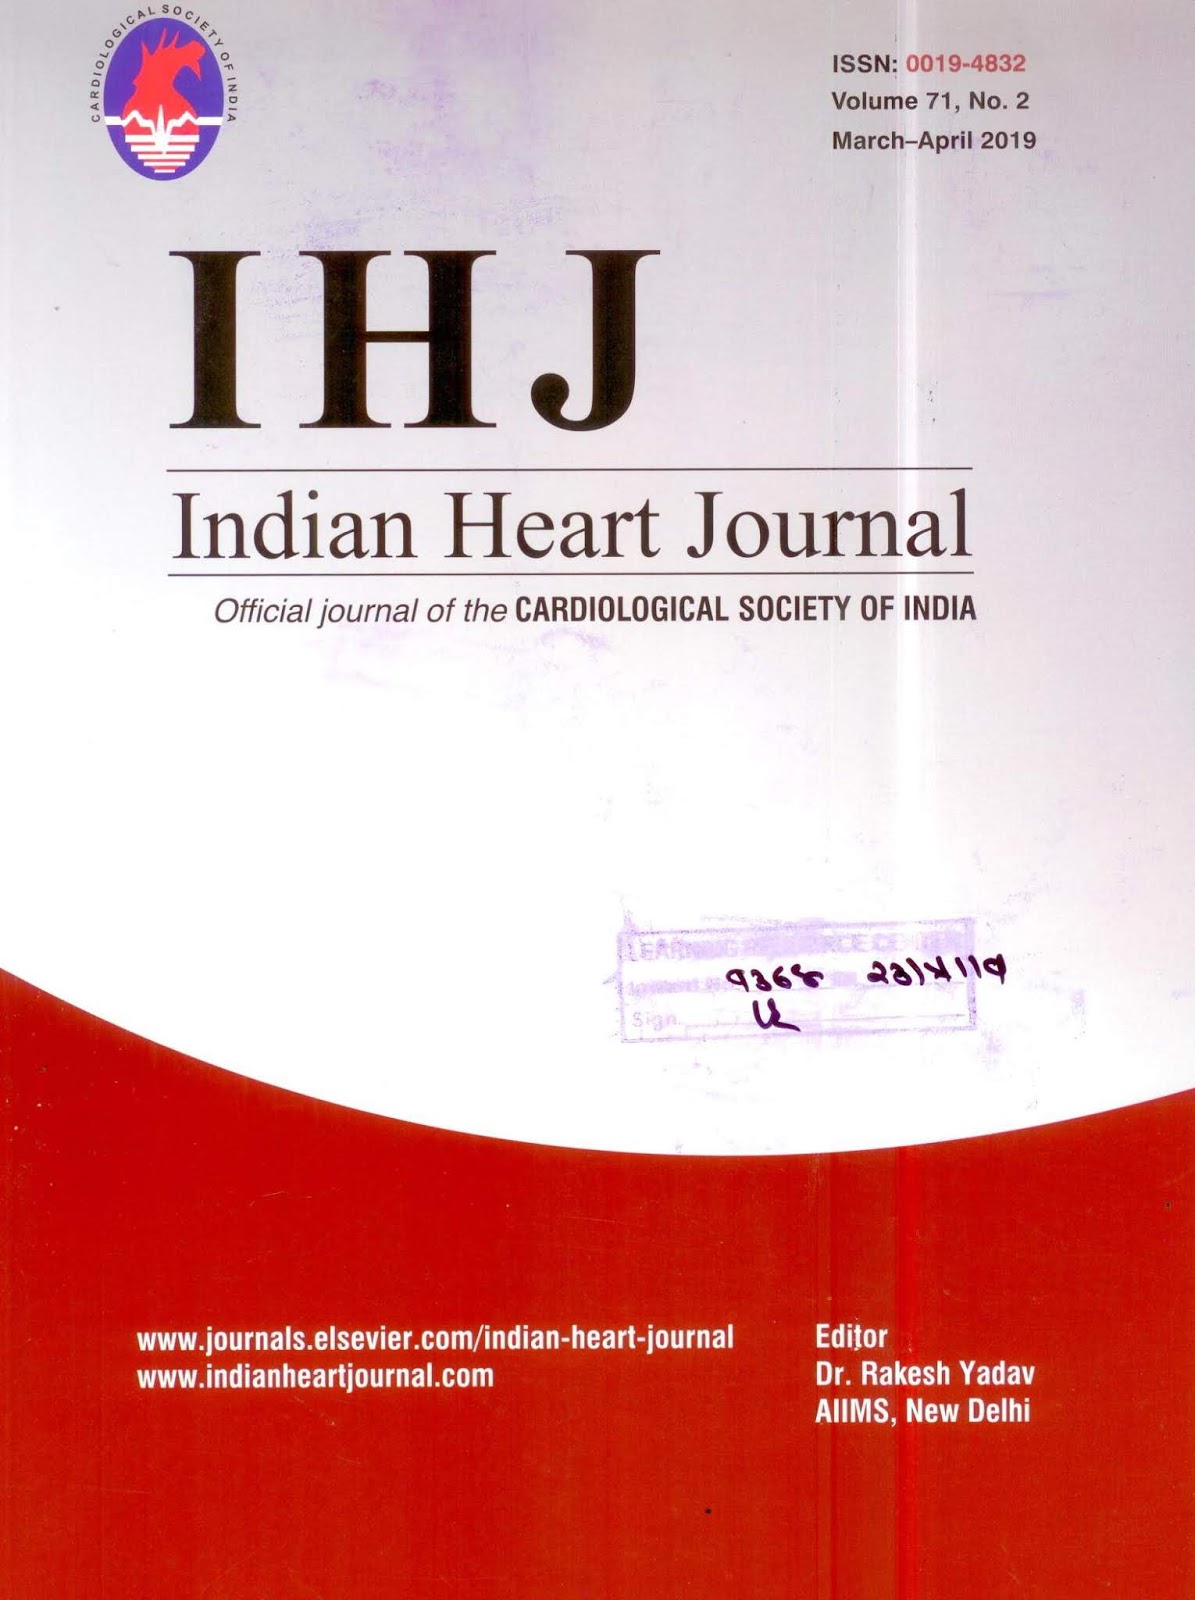 https://www.sciencedirect.com/journal/indian-heart-journal/vol/71/issue/2